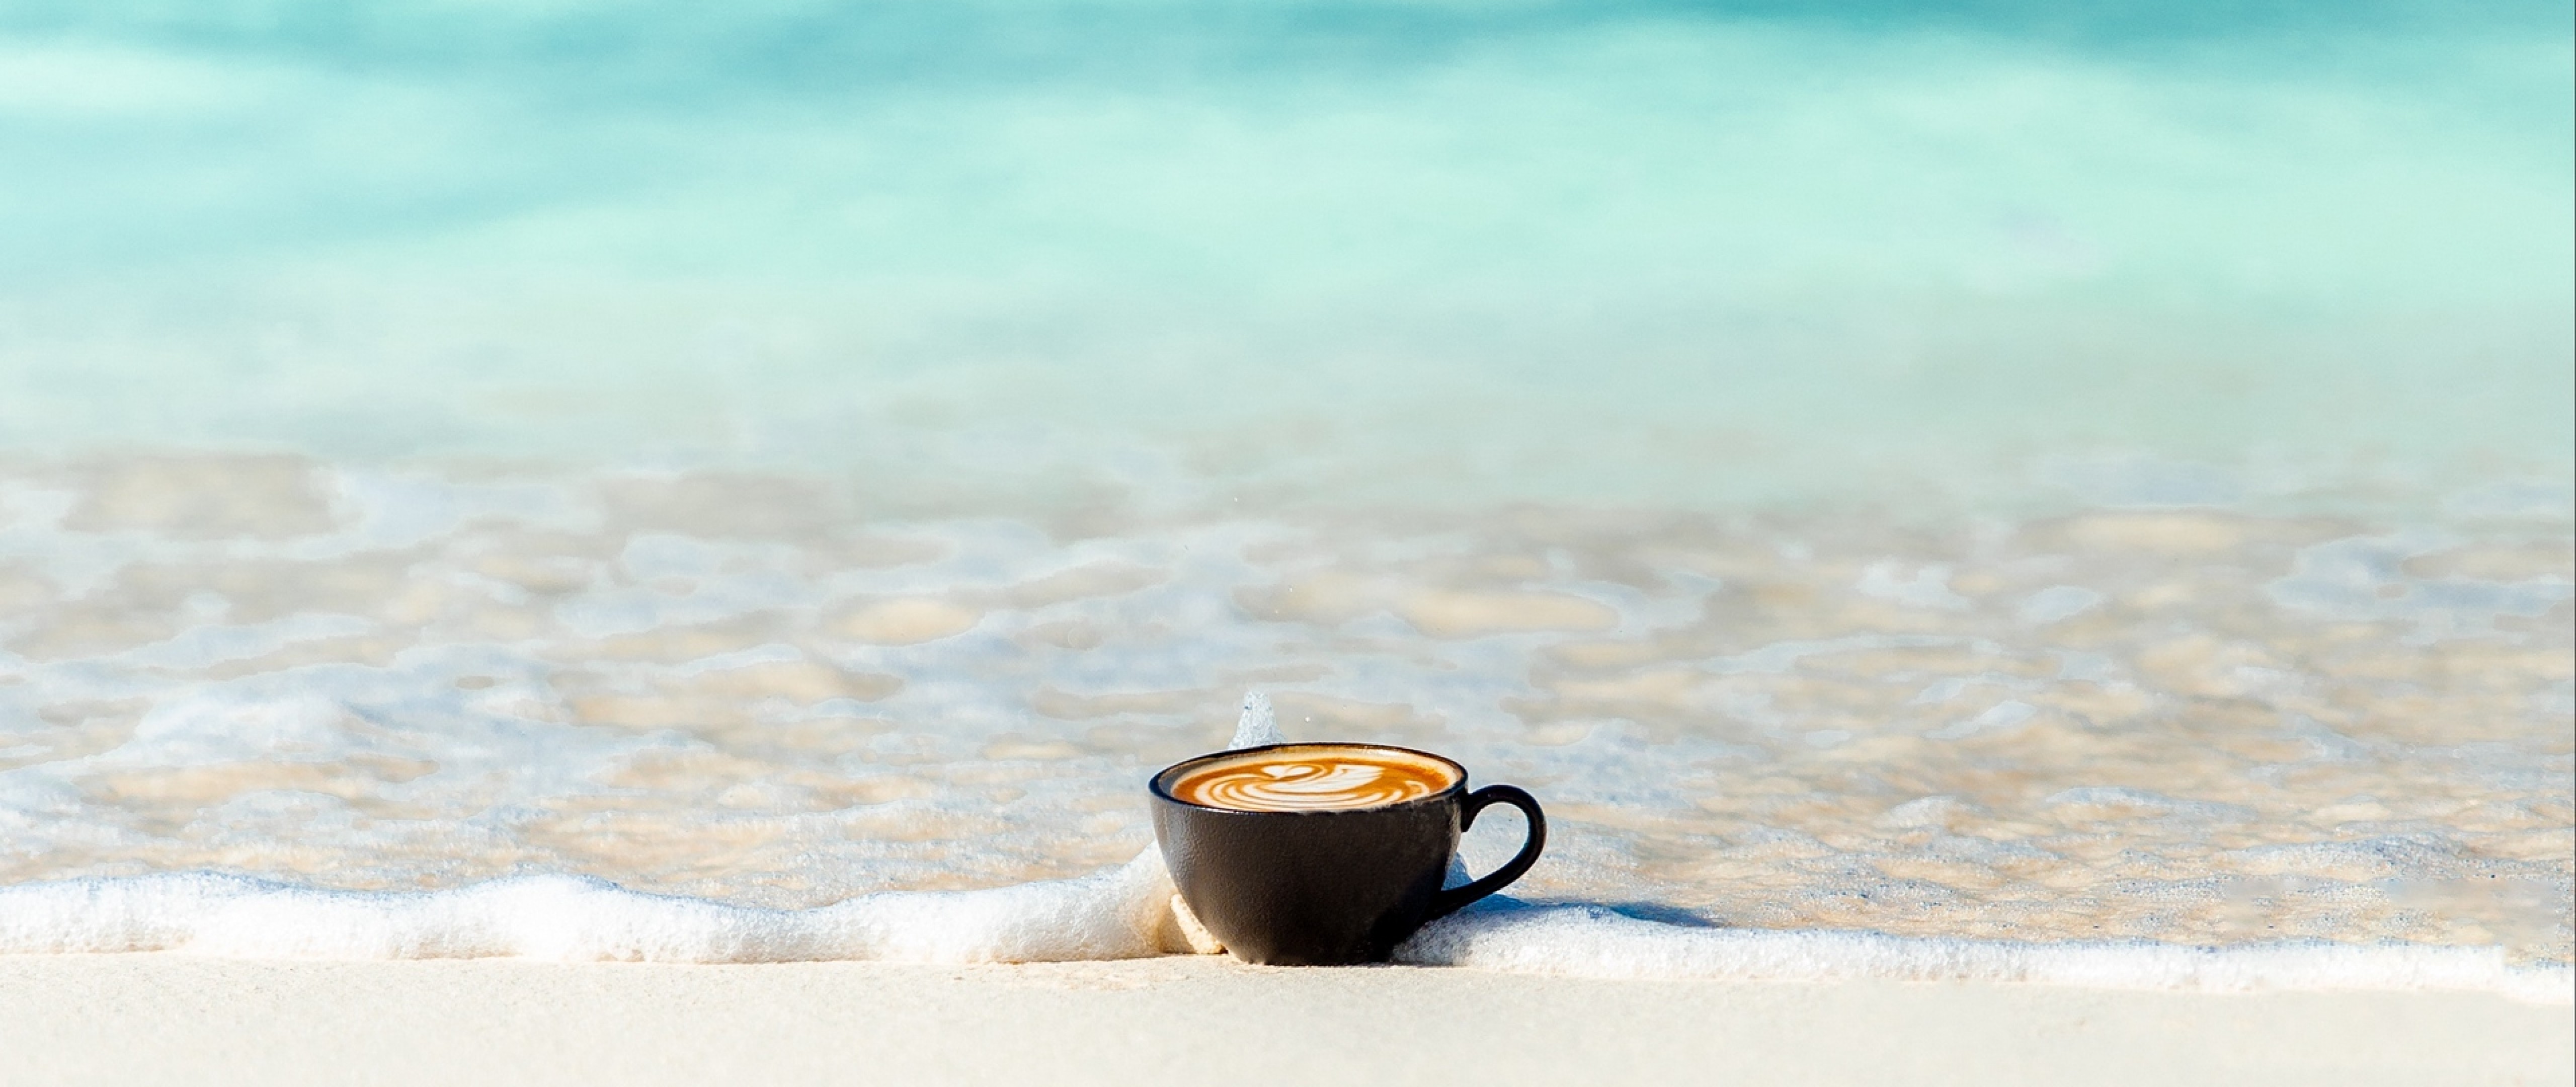 Sea cup. Кофе и море. Кофе с видом на море. Утреннее море. Кофе на берегу моря.